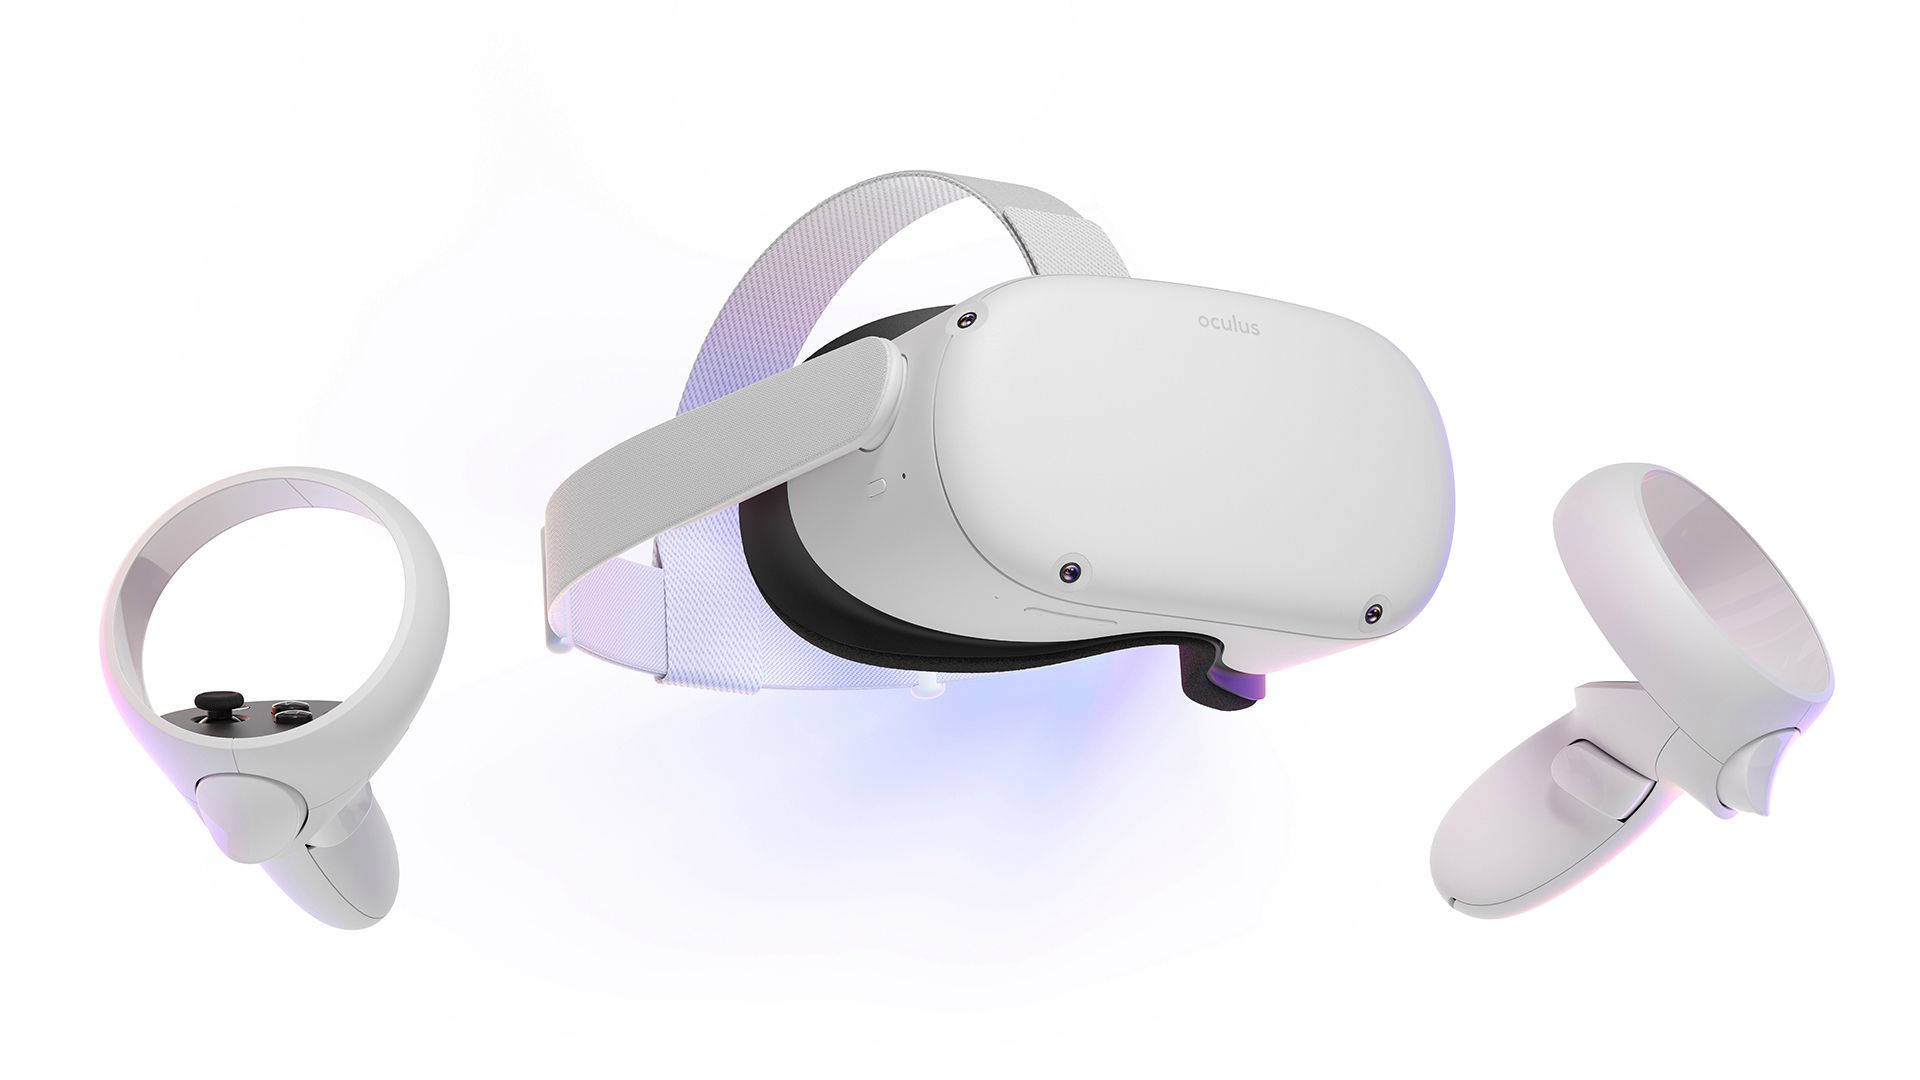 Illuminated Oculus Quest 2 Virtual Reality Headset Background